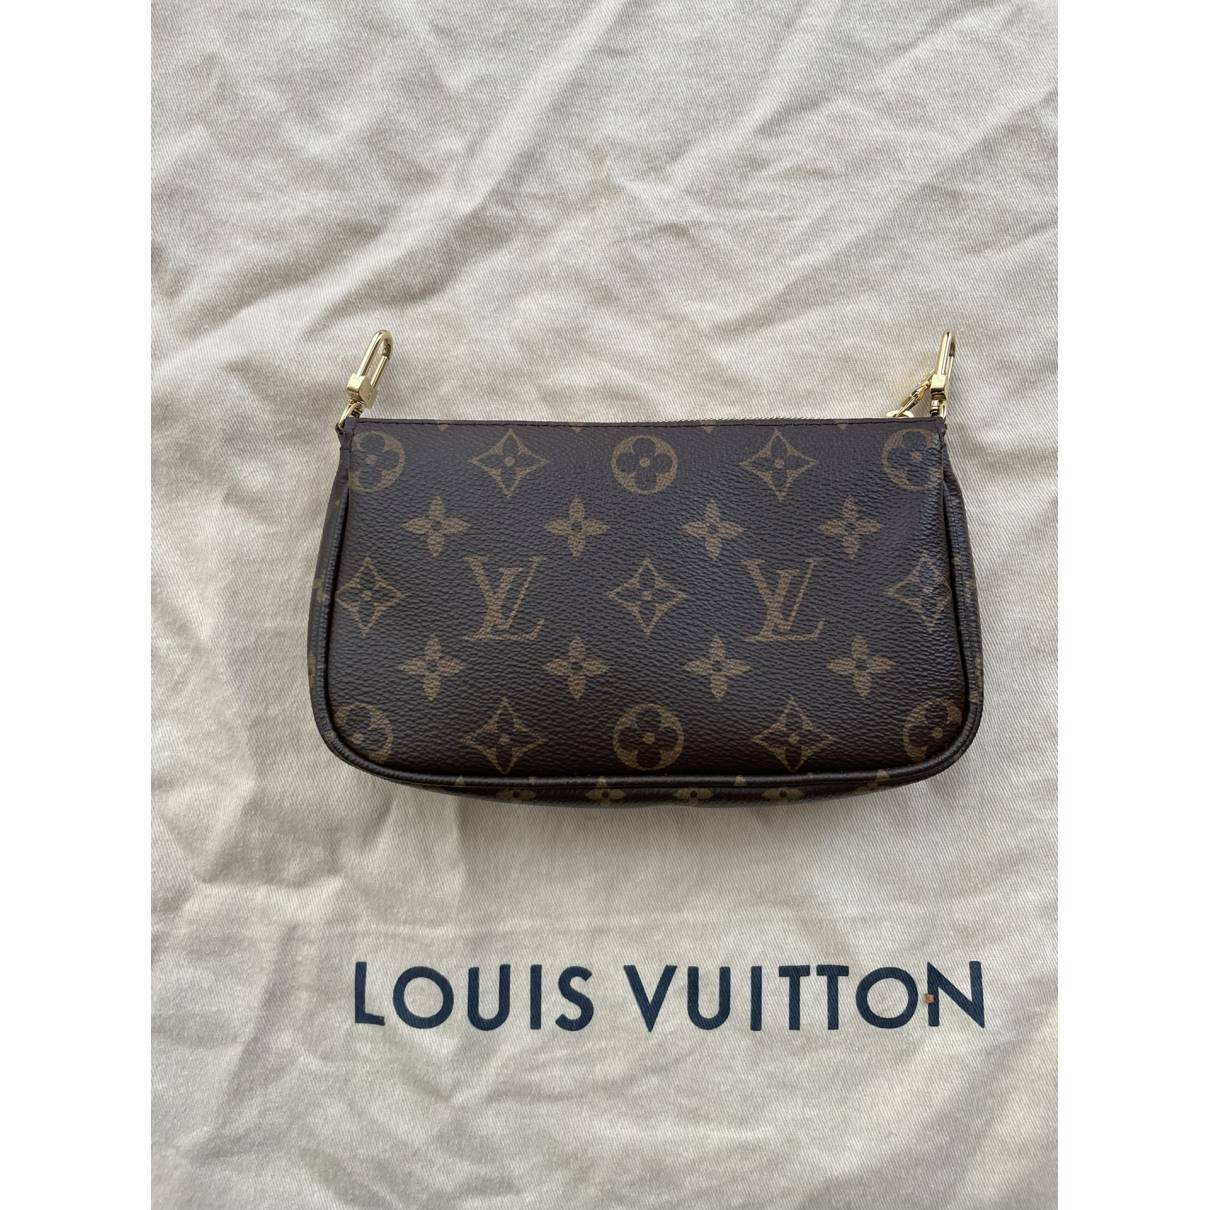 Louis vuitton MULTI POCHETTE ACCESSOIRES & Cross Bag Fashionable - For  woman - Brown - Abdelaziz street